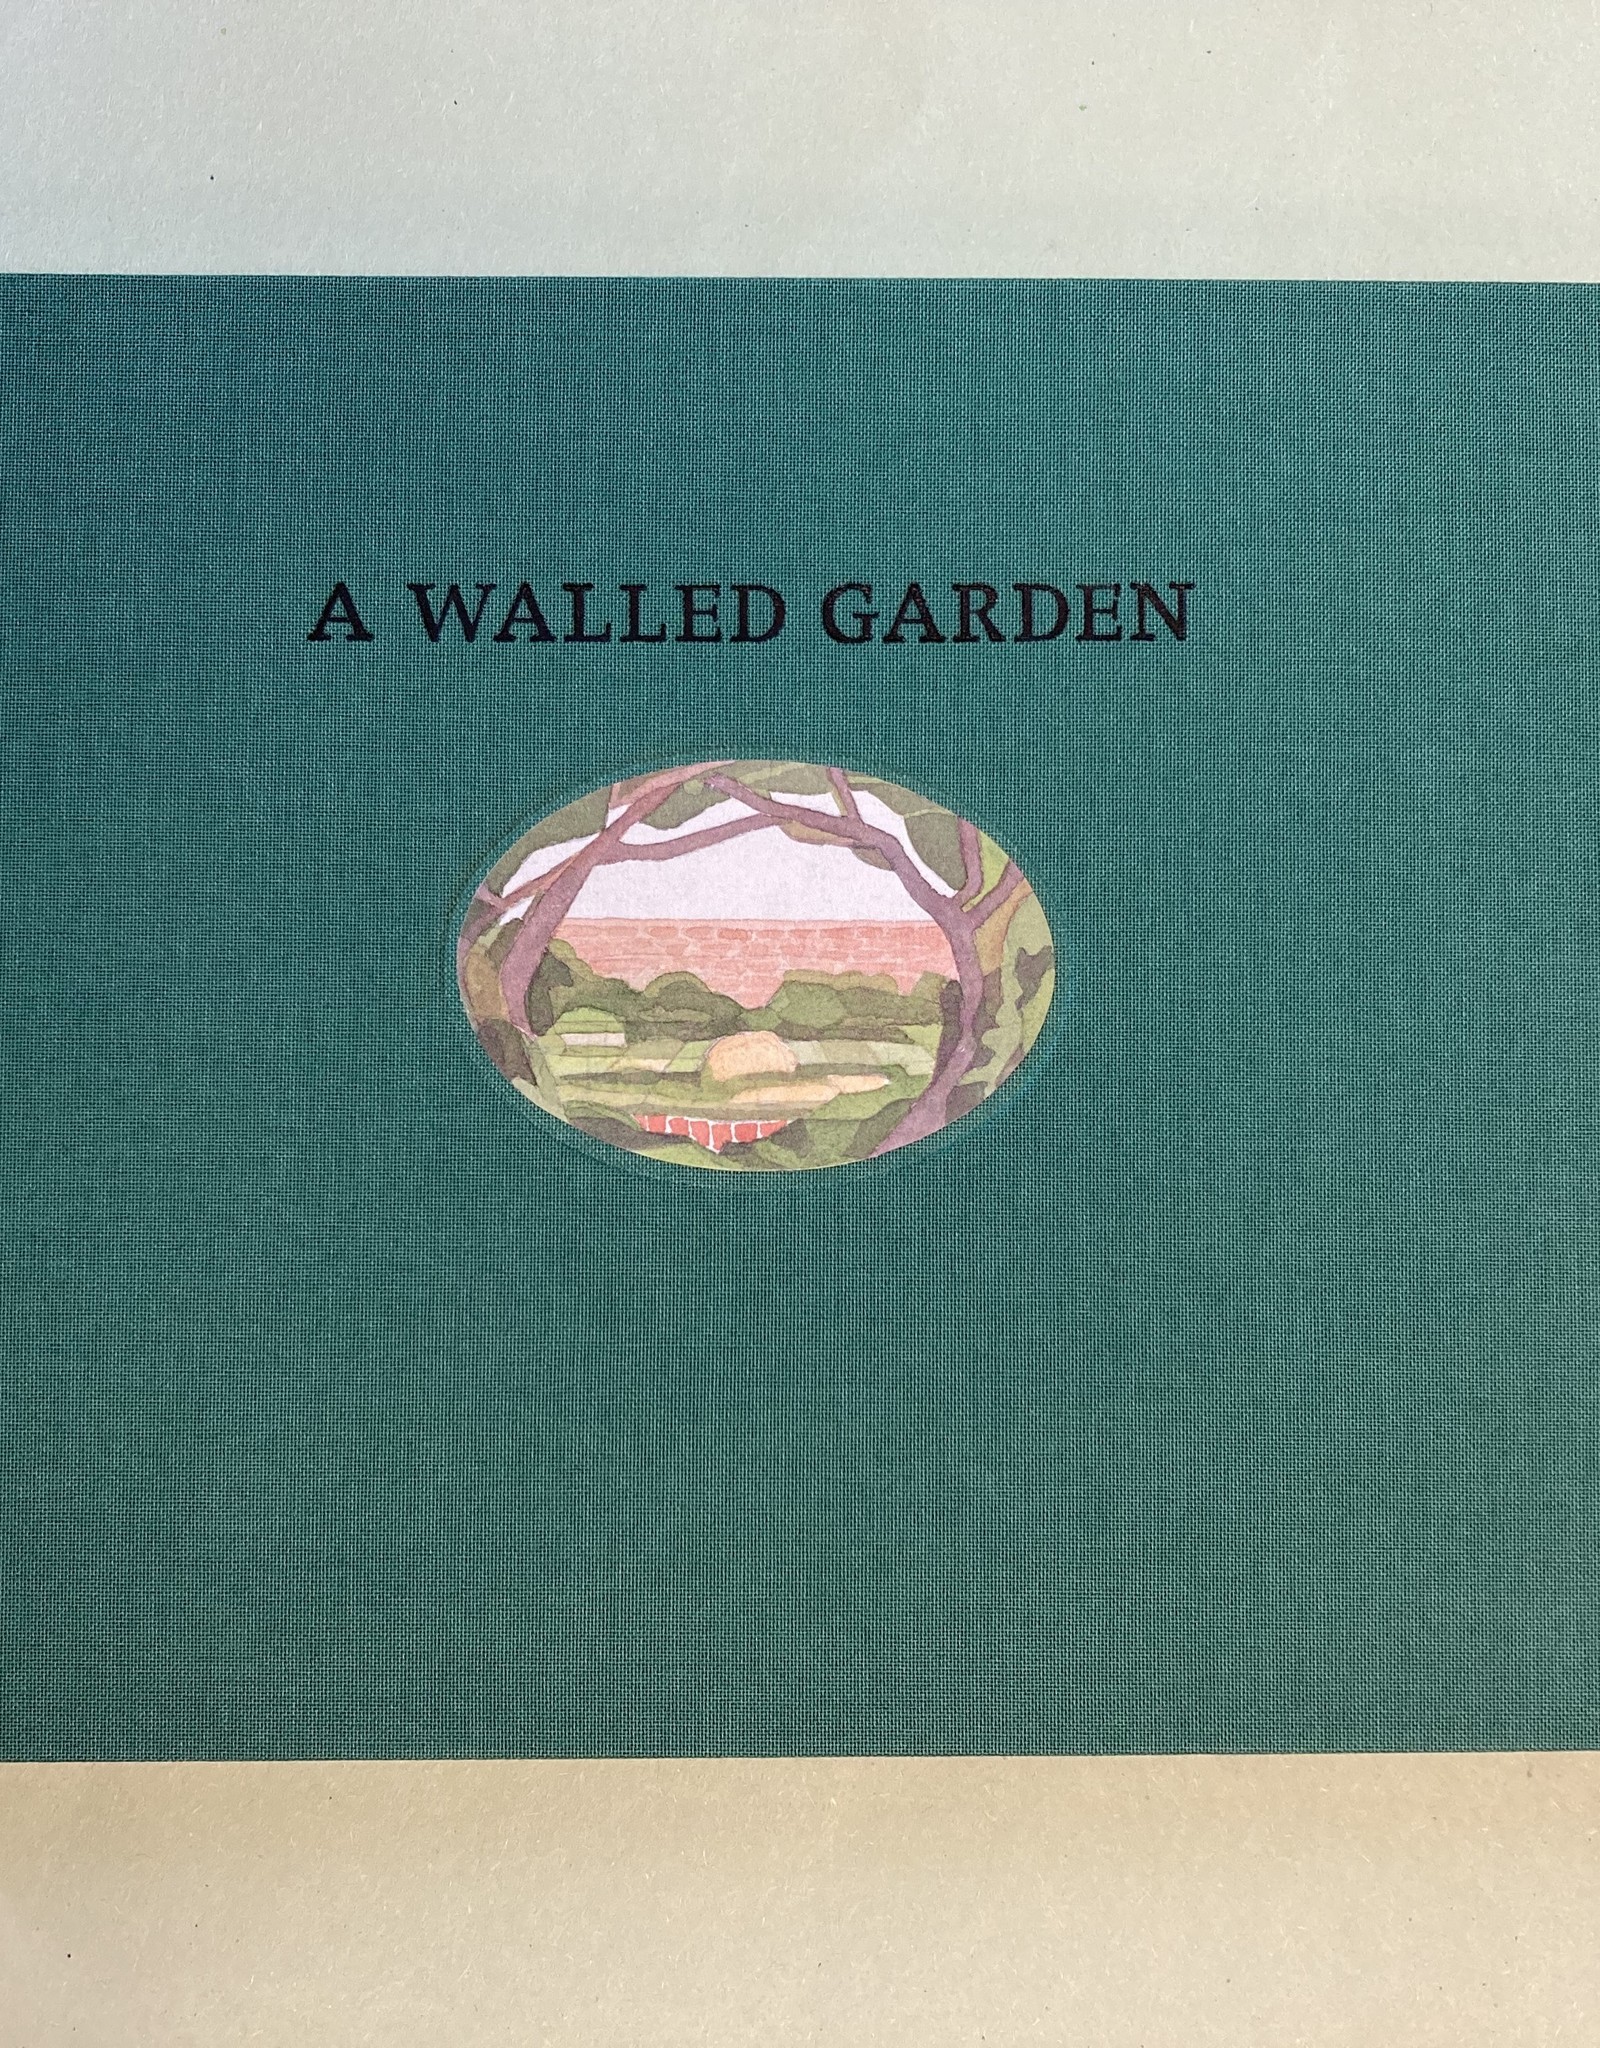 Coracle A Walled Garden - Finlay & Gardner